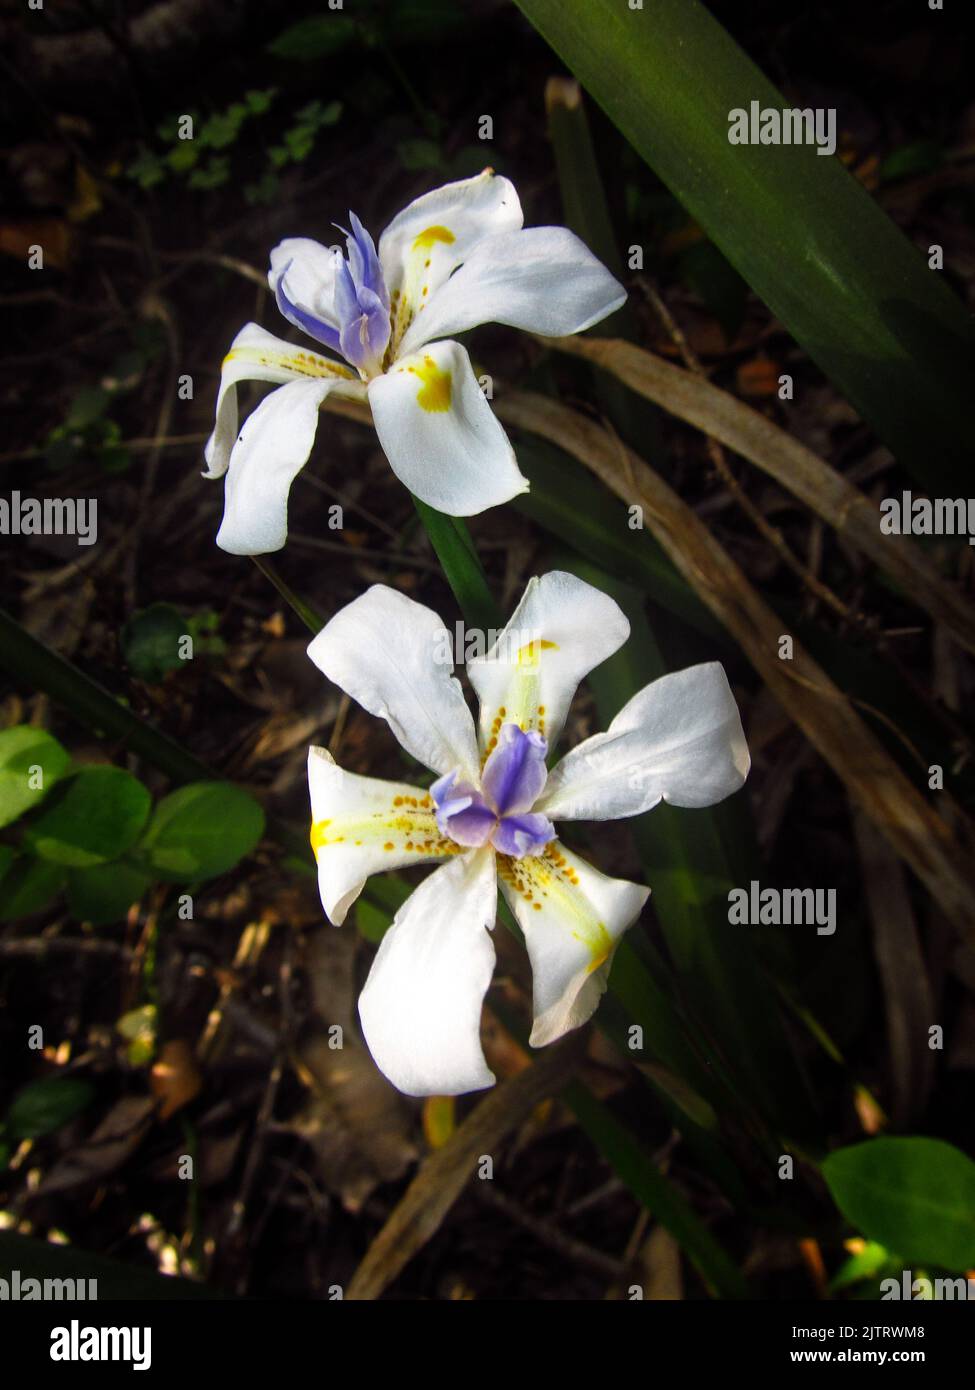 Splendidi fiori bianchi del legno africano Iris, Dietes Iridiodes, che crescono selvaggi nella foresta di Tsitsikamma. Foto Stock